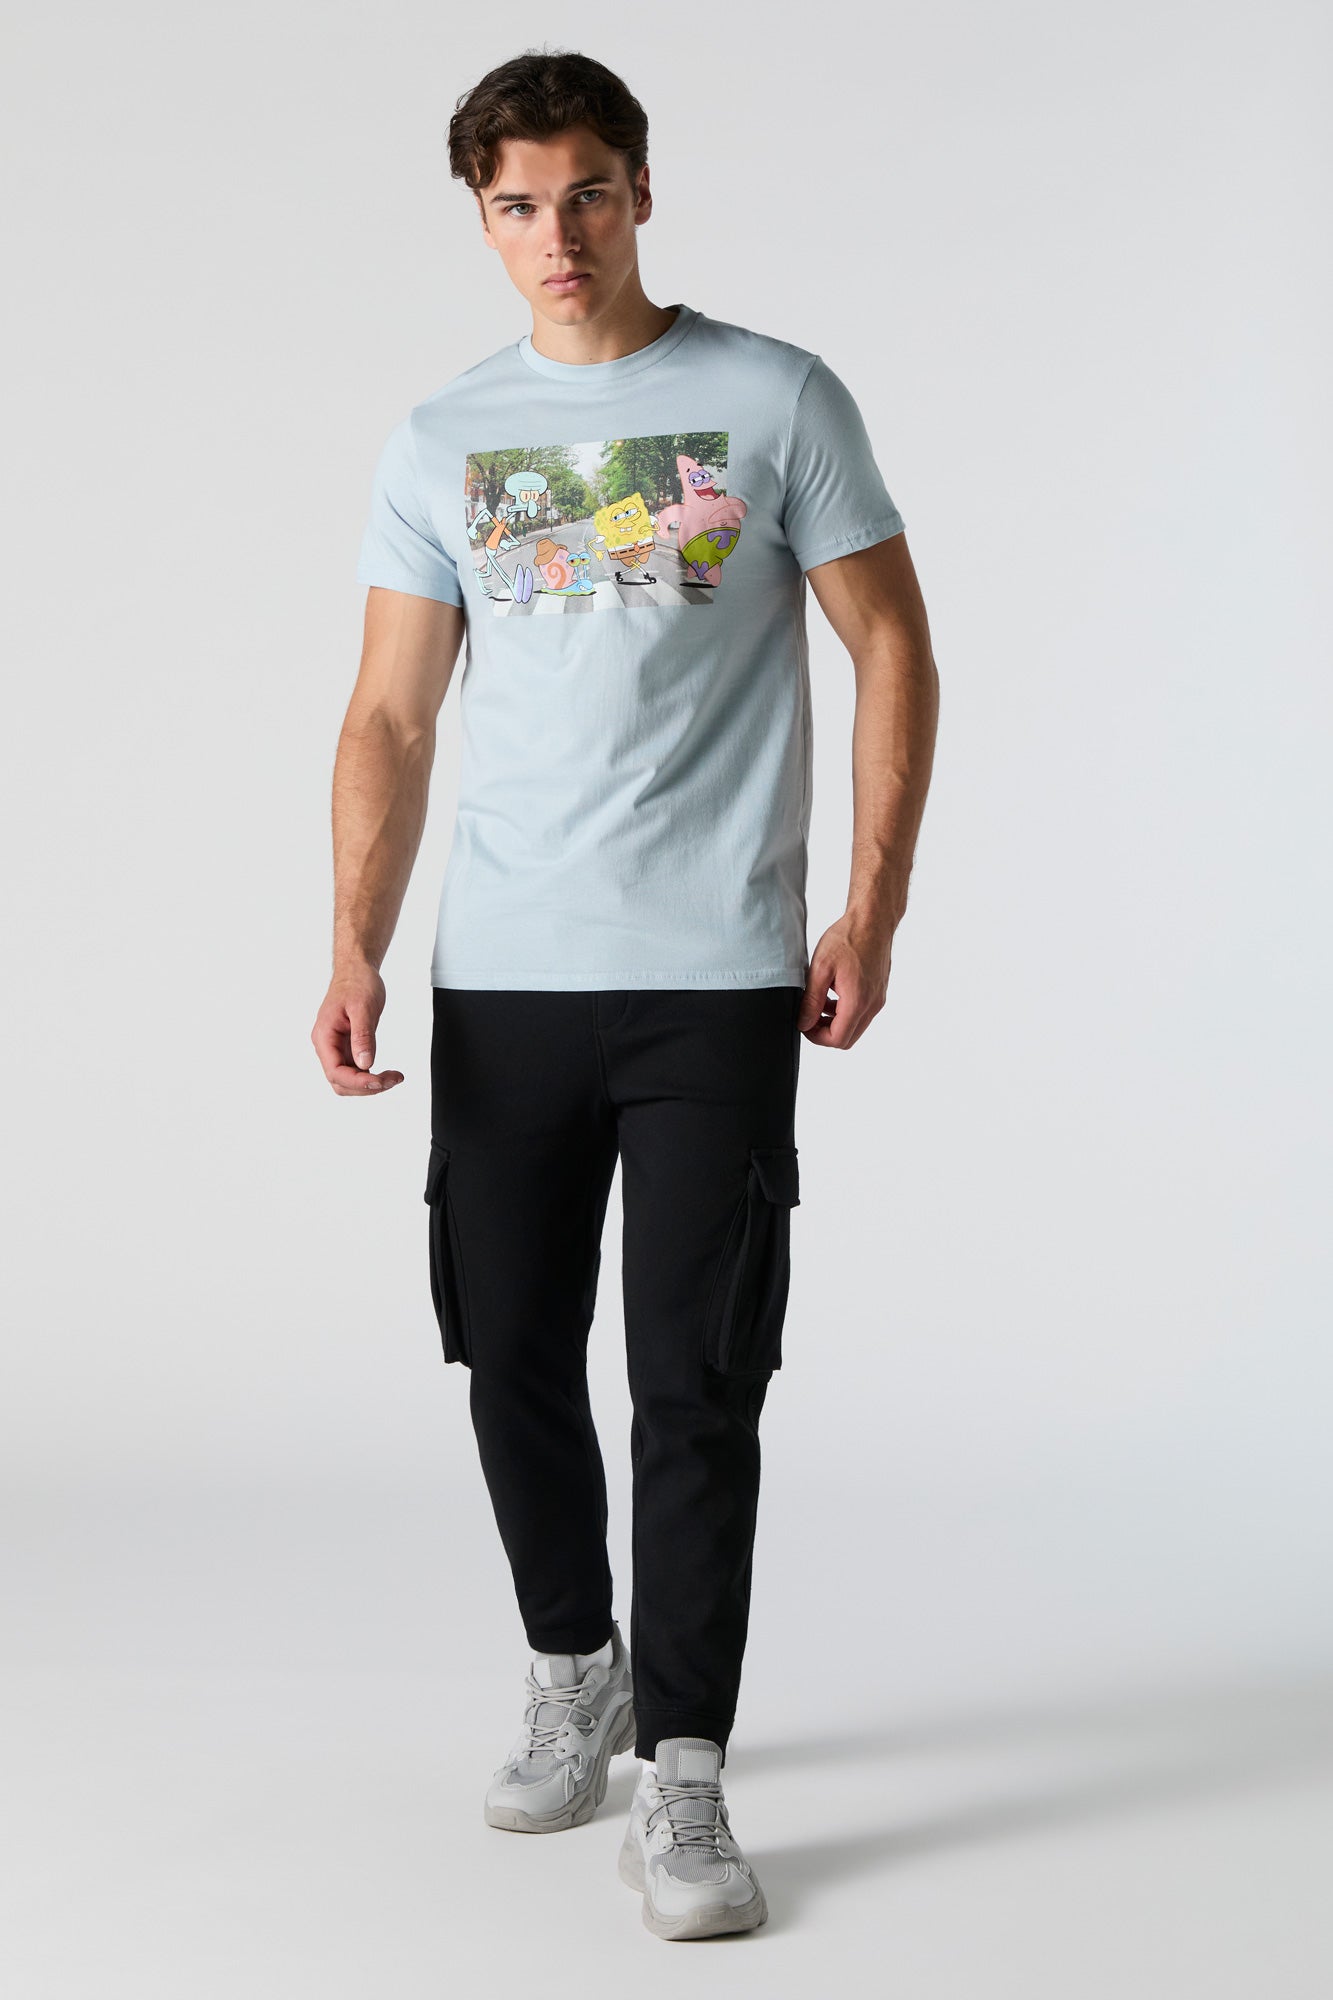 SpongeBob Abbey Road Graphic T-Shirt